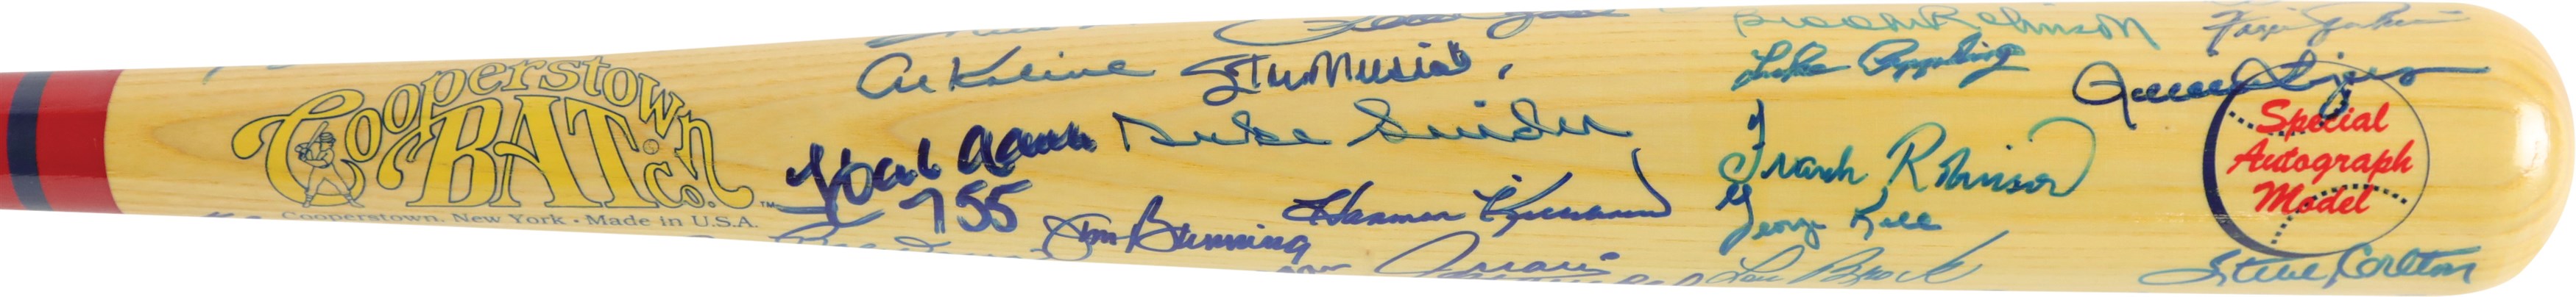 Baseball Autographs - Hall of Famer Multi-Signed Bat - 51 Signatures w/Aaron, Mays, Snider, Berra & Musial (JSA)